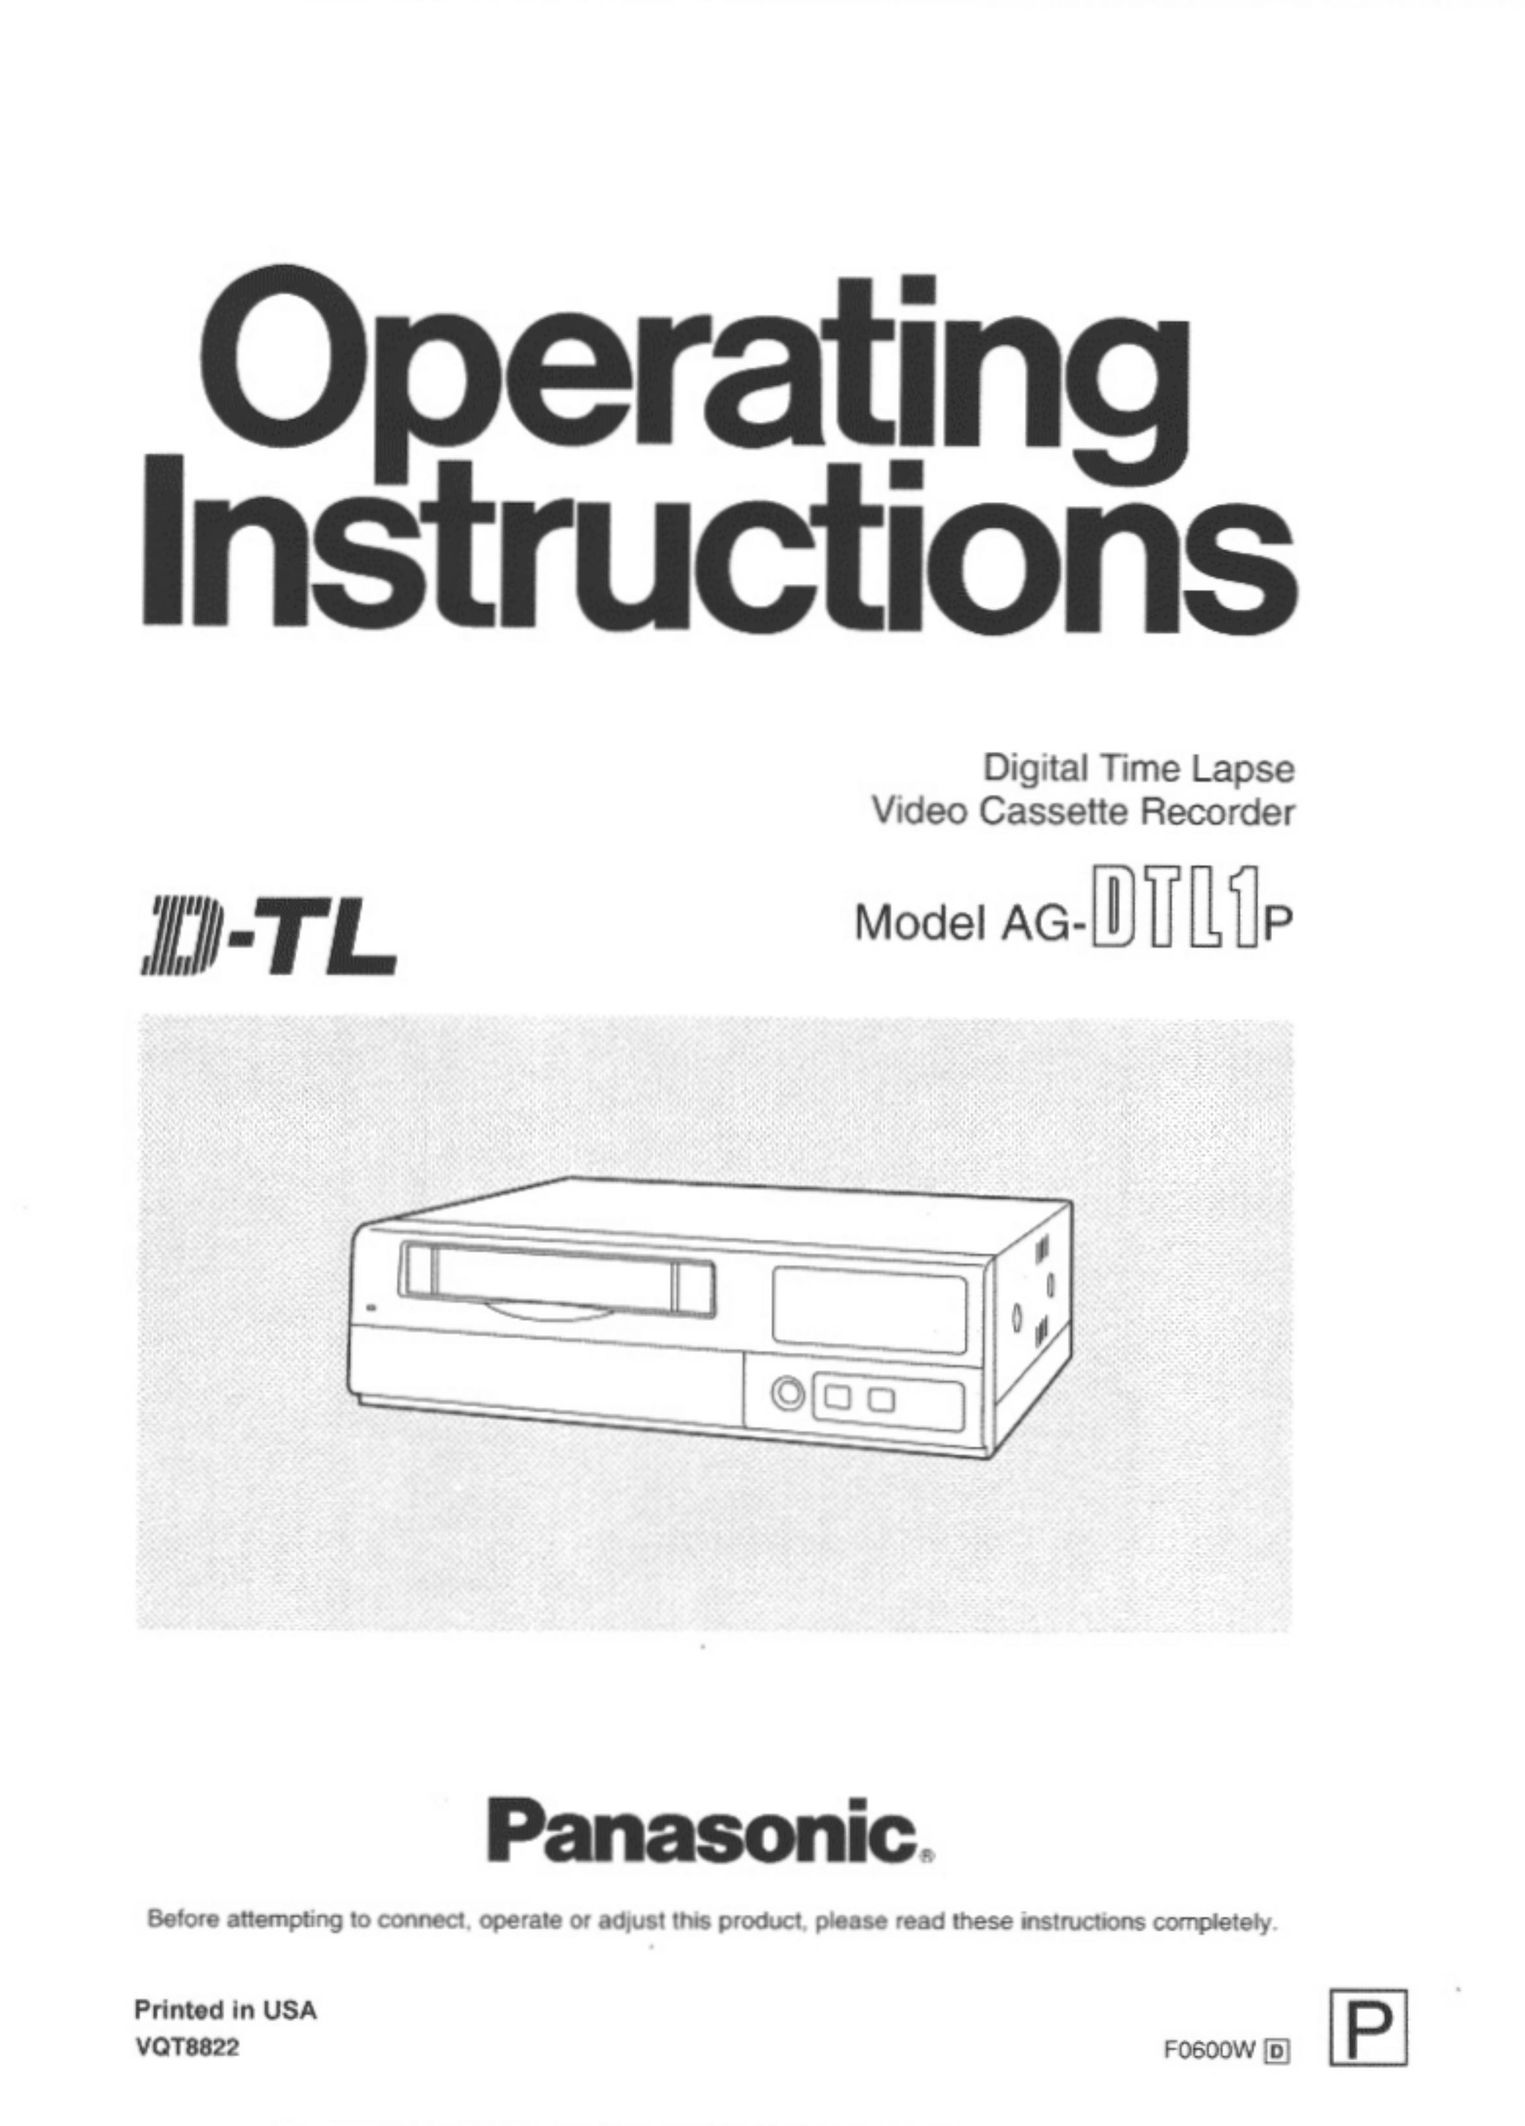 Panasonic AG-DTL1P VCR User Manual